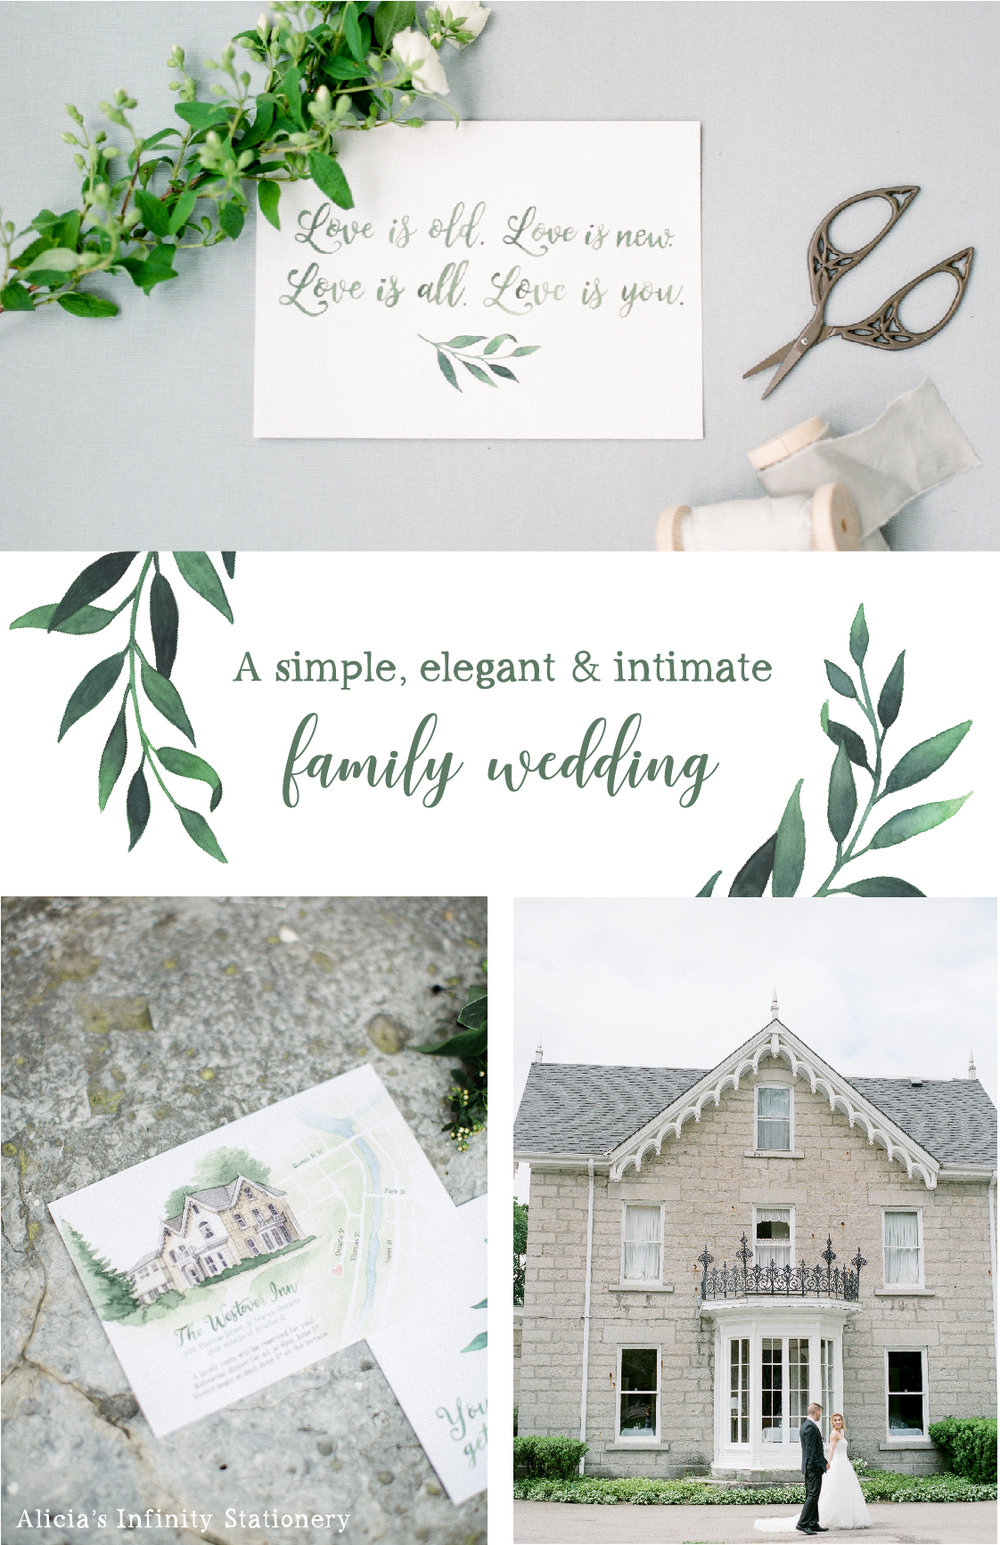 Alicias-Infinity-Wedding-Invitations-Stationery-Small-Family-Wedding-01.jpg